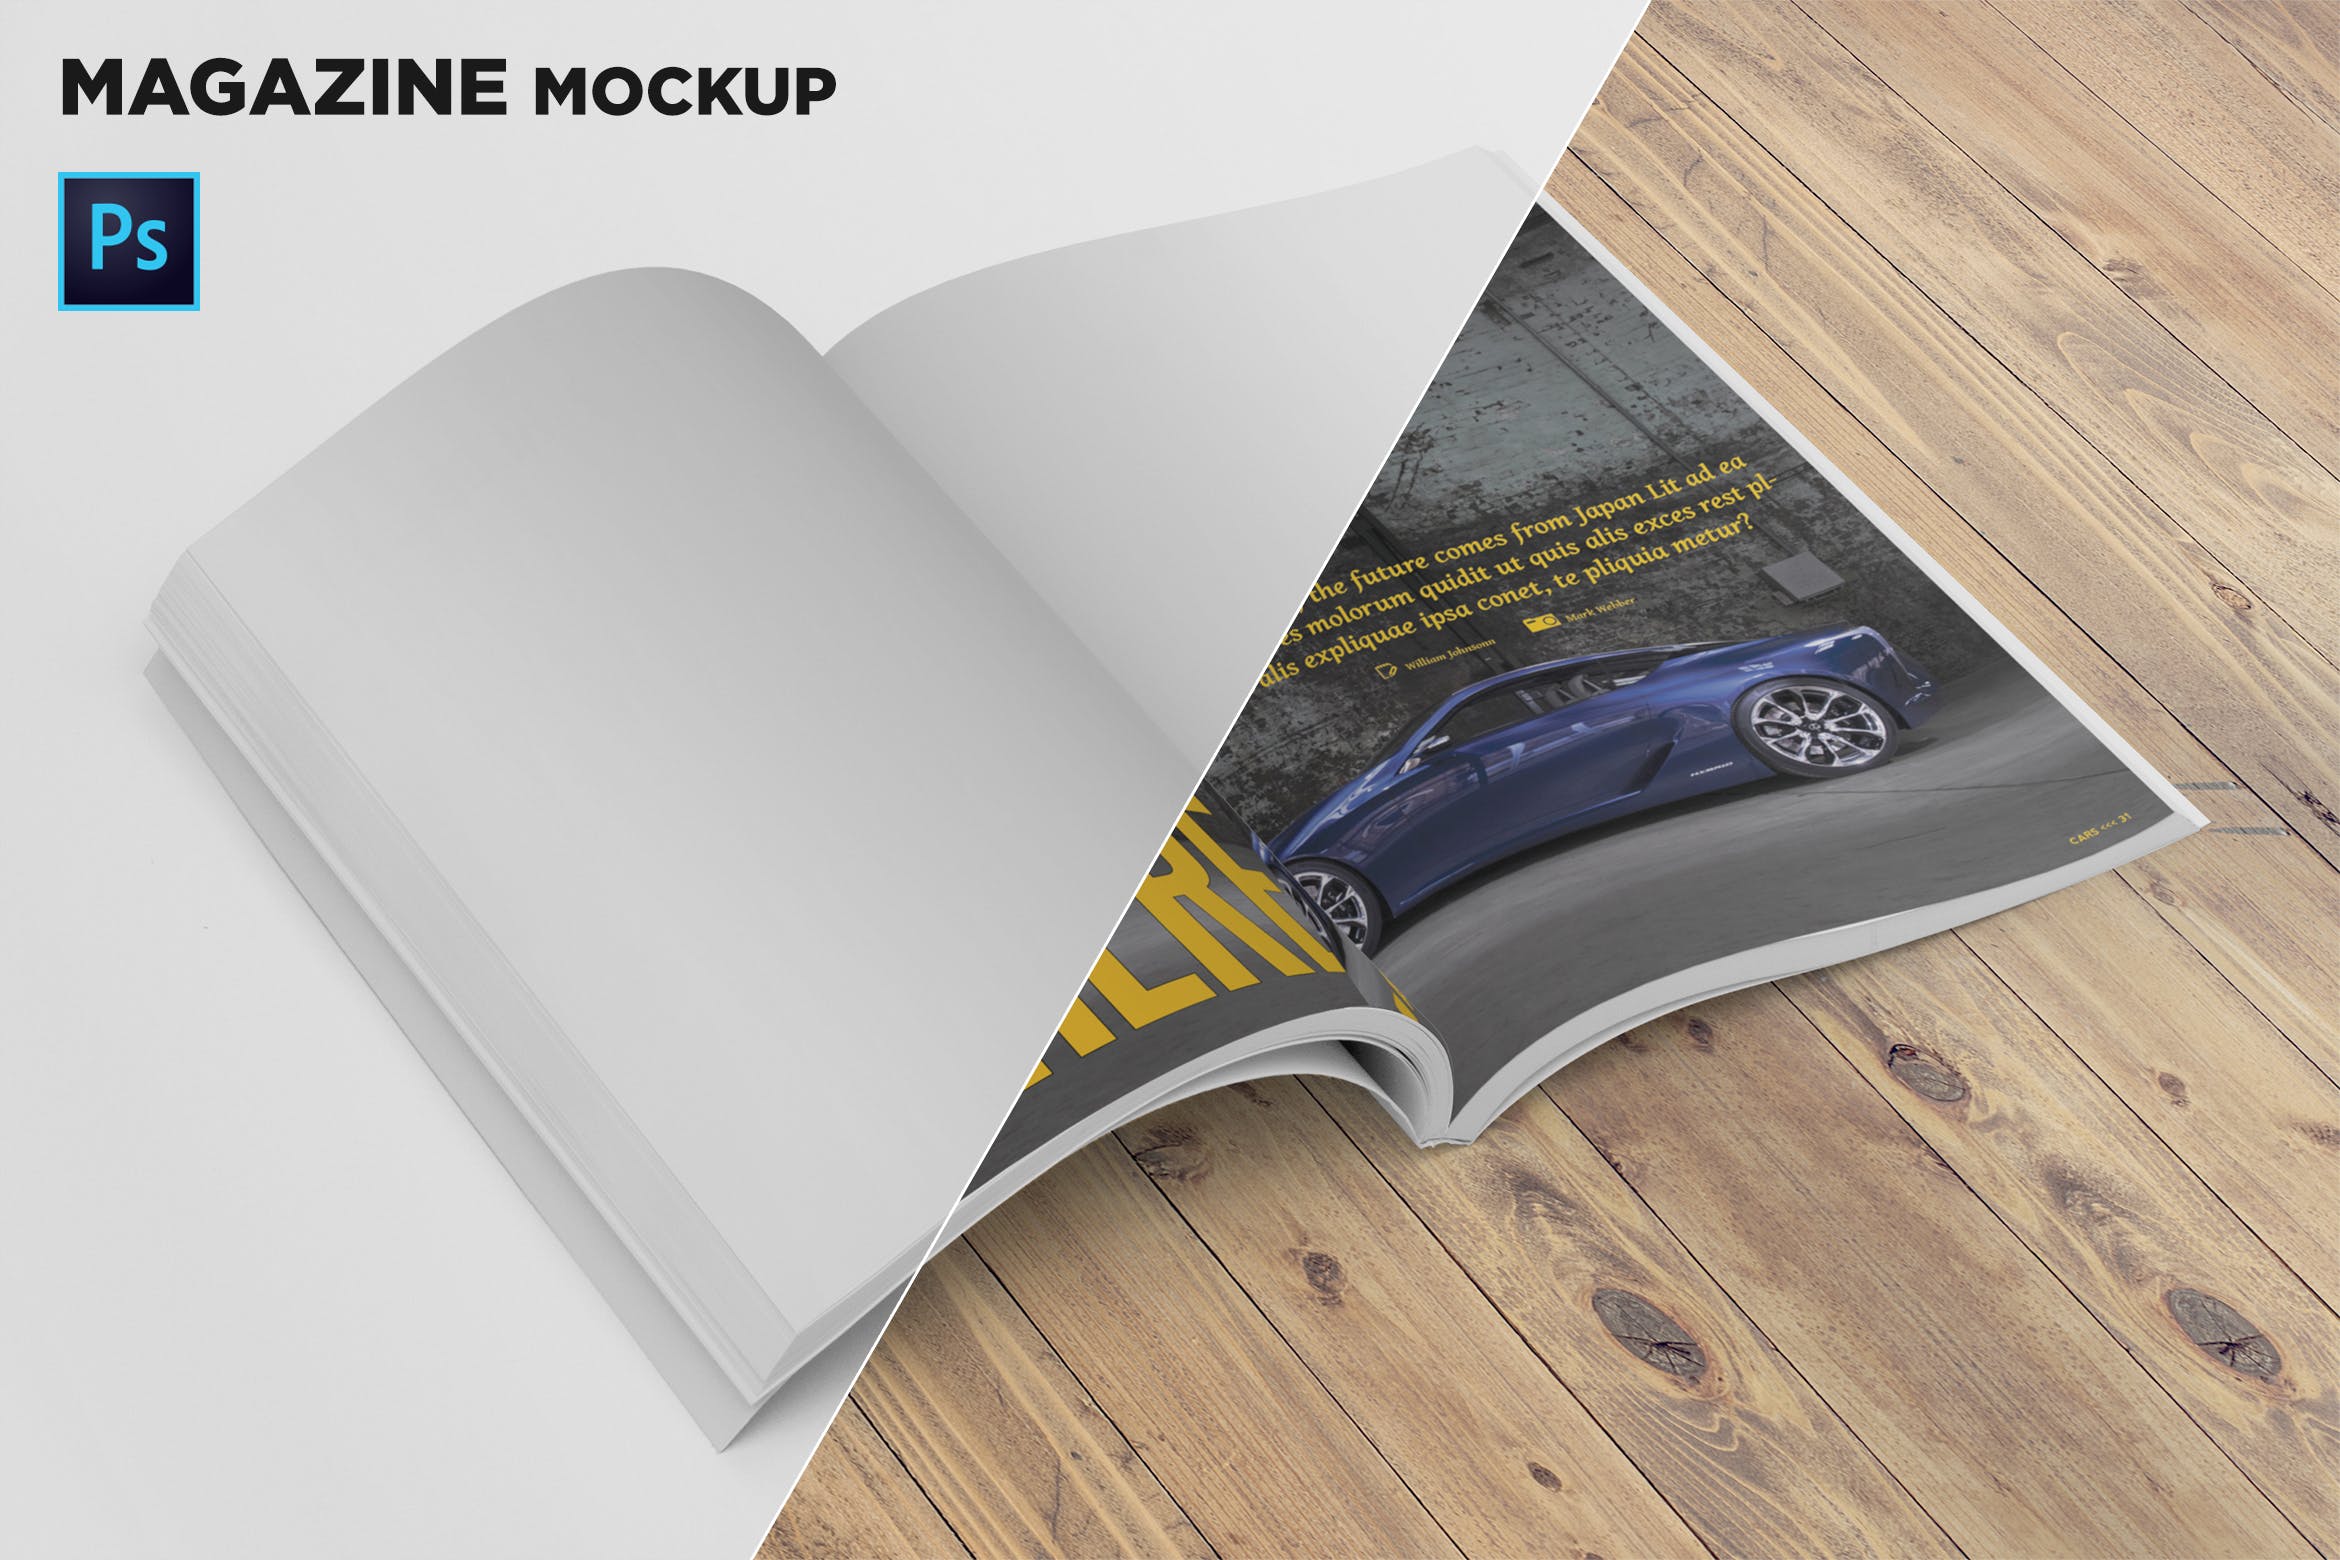 杂志内页排版设计翻页透视图样机16图库精选 Magazine Mockup Folded Page Perspective View插图